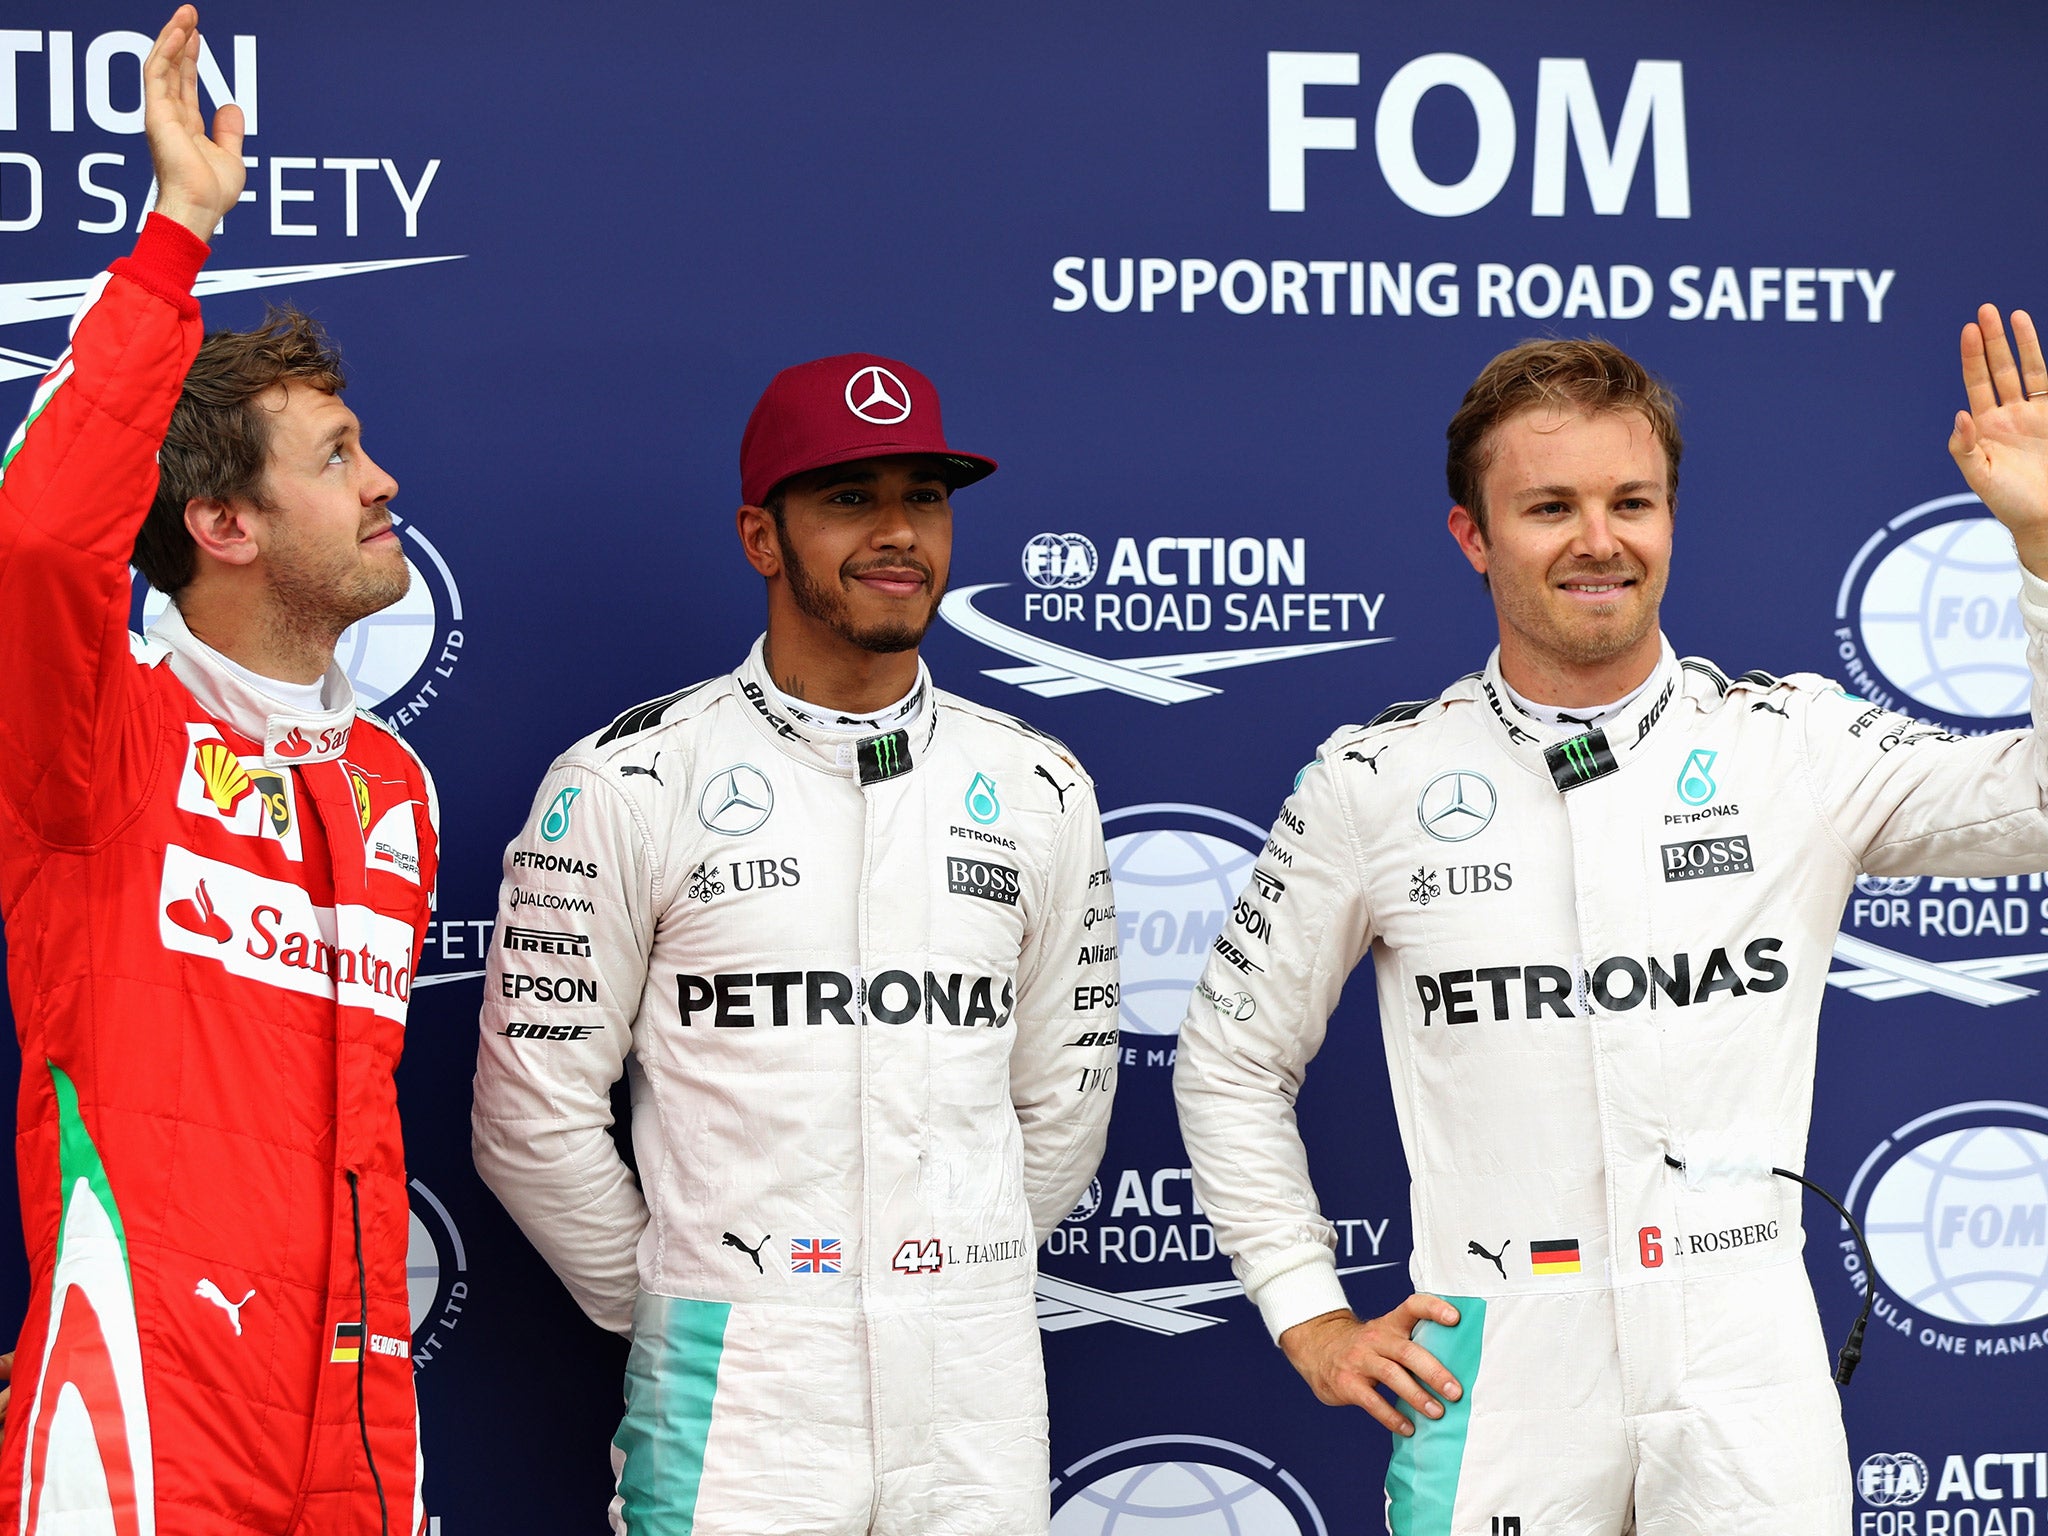 Lewis Hamilton starts on pole ahead of Nico Rosberg and Sebastian Vettel in Canada